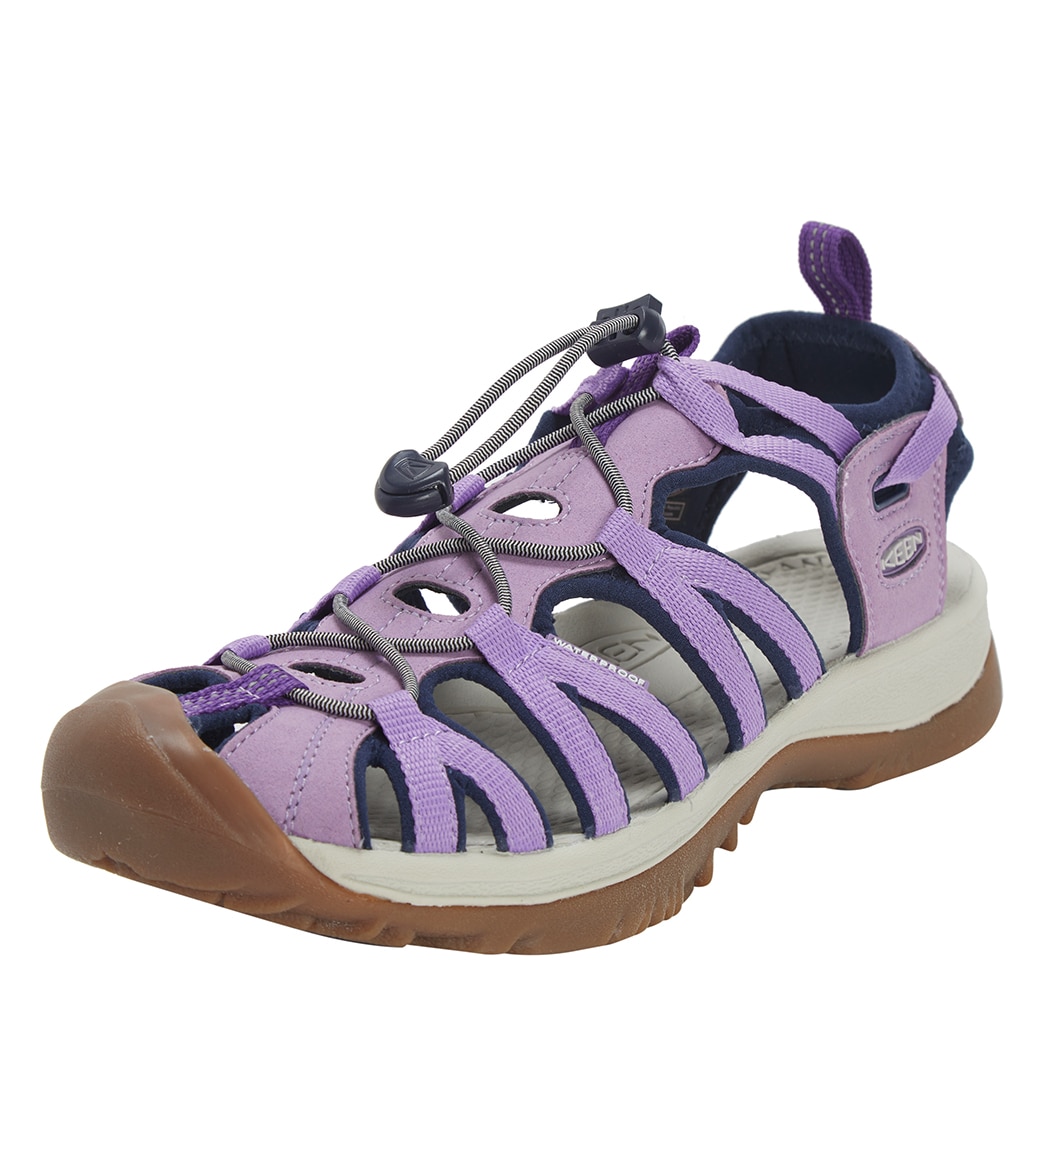 Keen Women's Whisper Water Shoes - Chalk Violet/English Lavender 10 - Swimoutlet.com